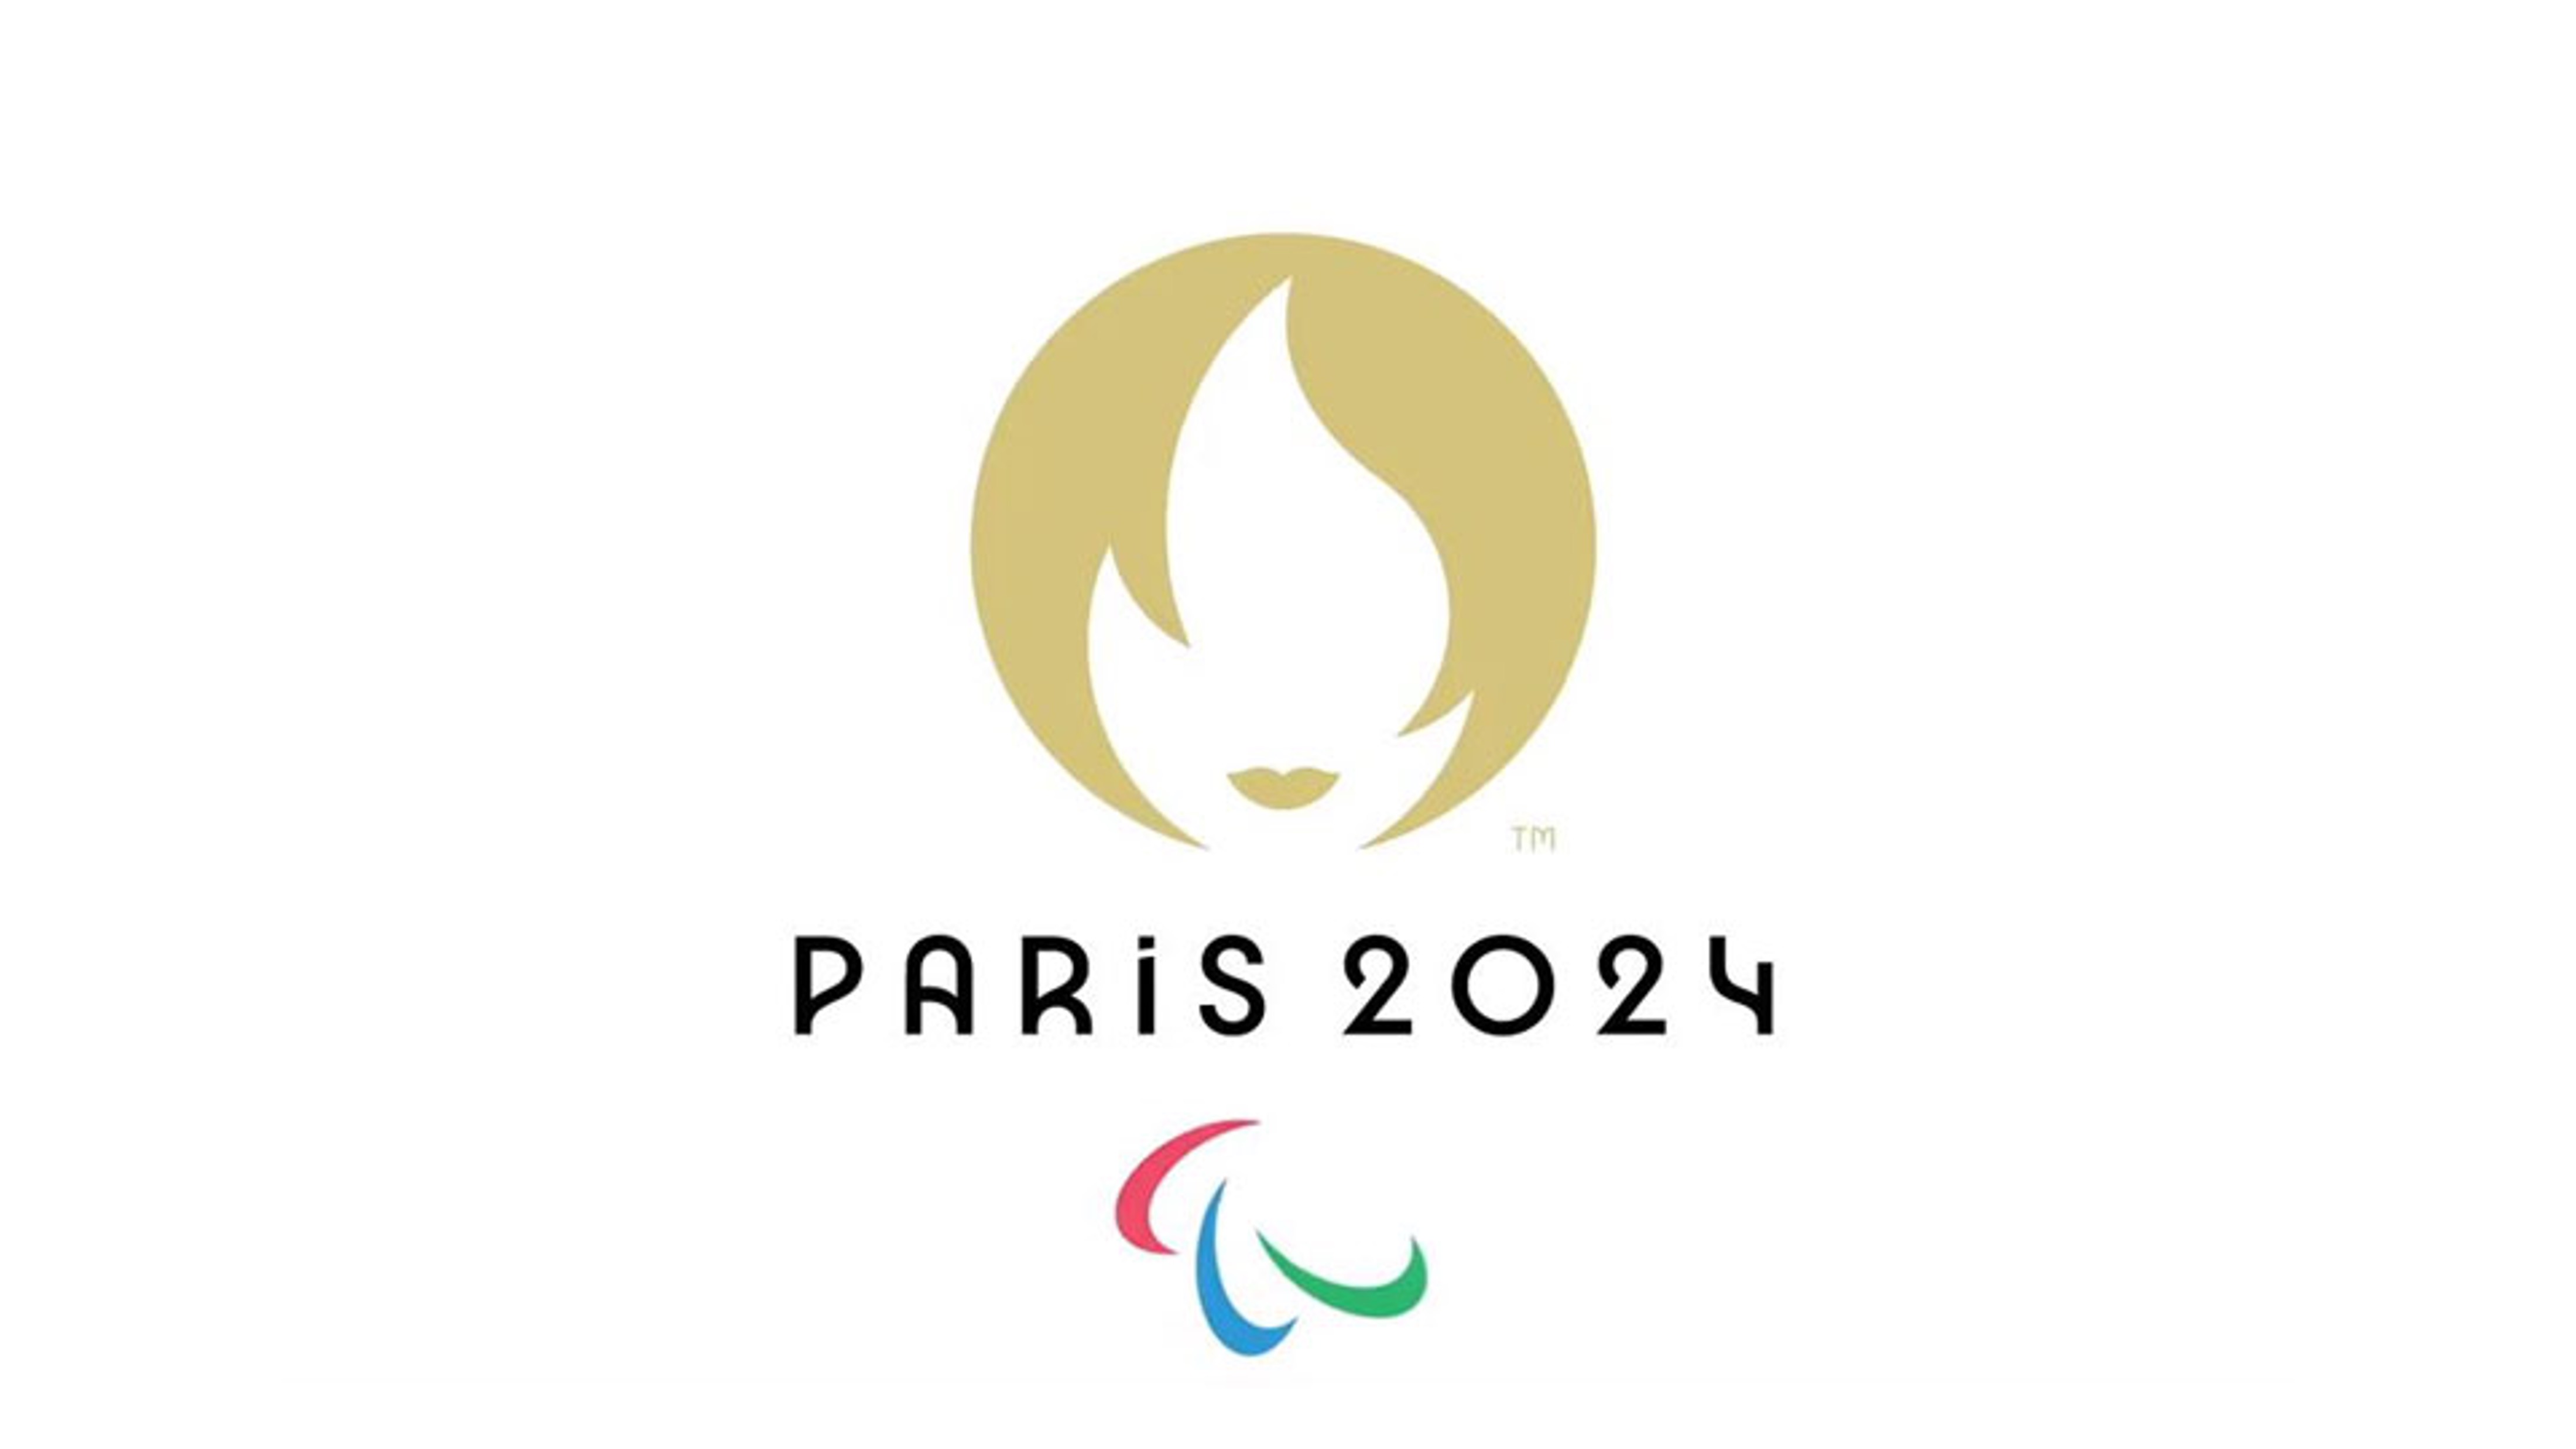 Paralympics Paris 2024 logo